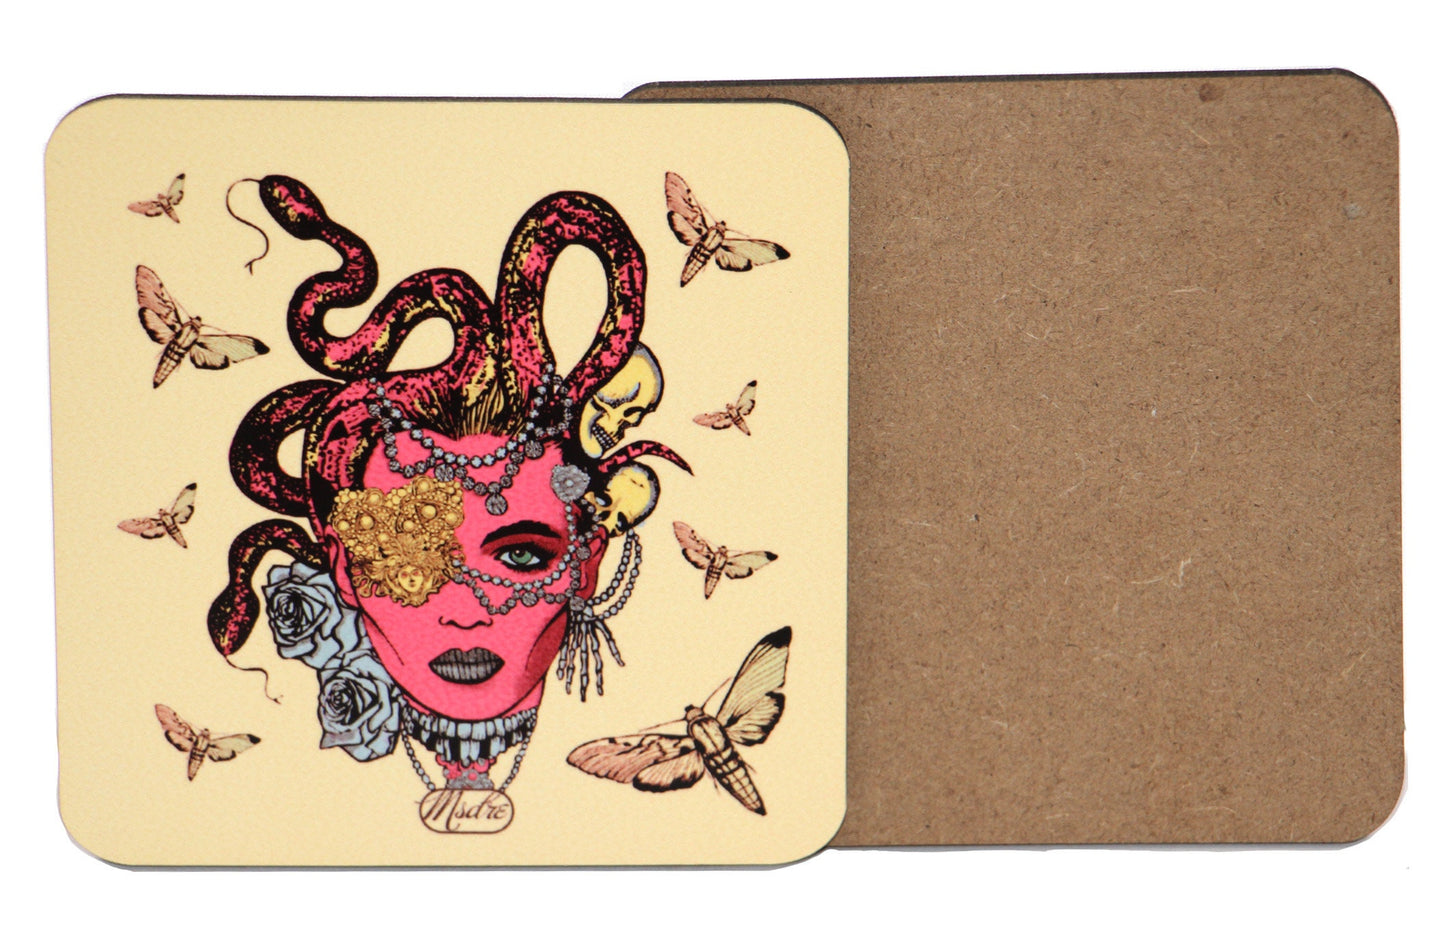 Medusa Pink and Yellow Moth Alternative Kitsch Gothic Coaster By Artist Msdre